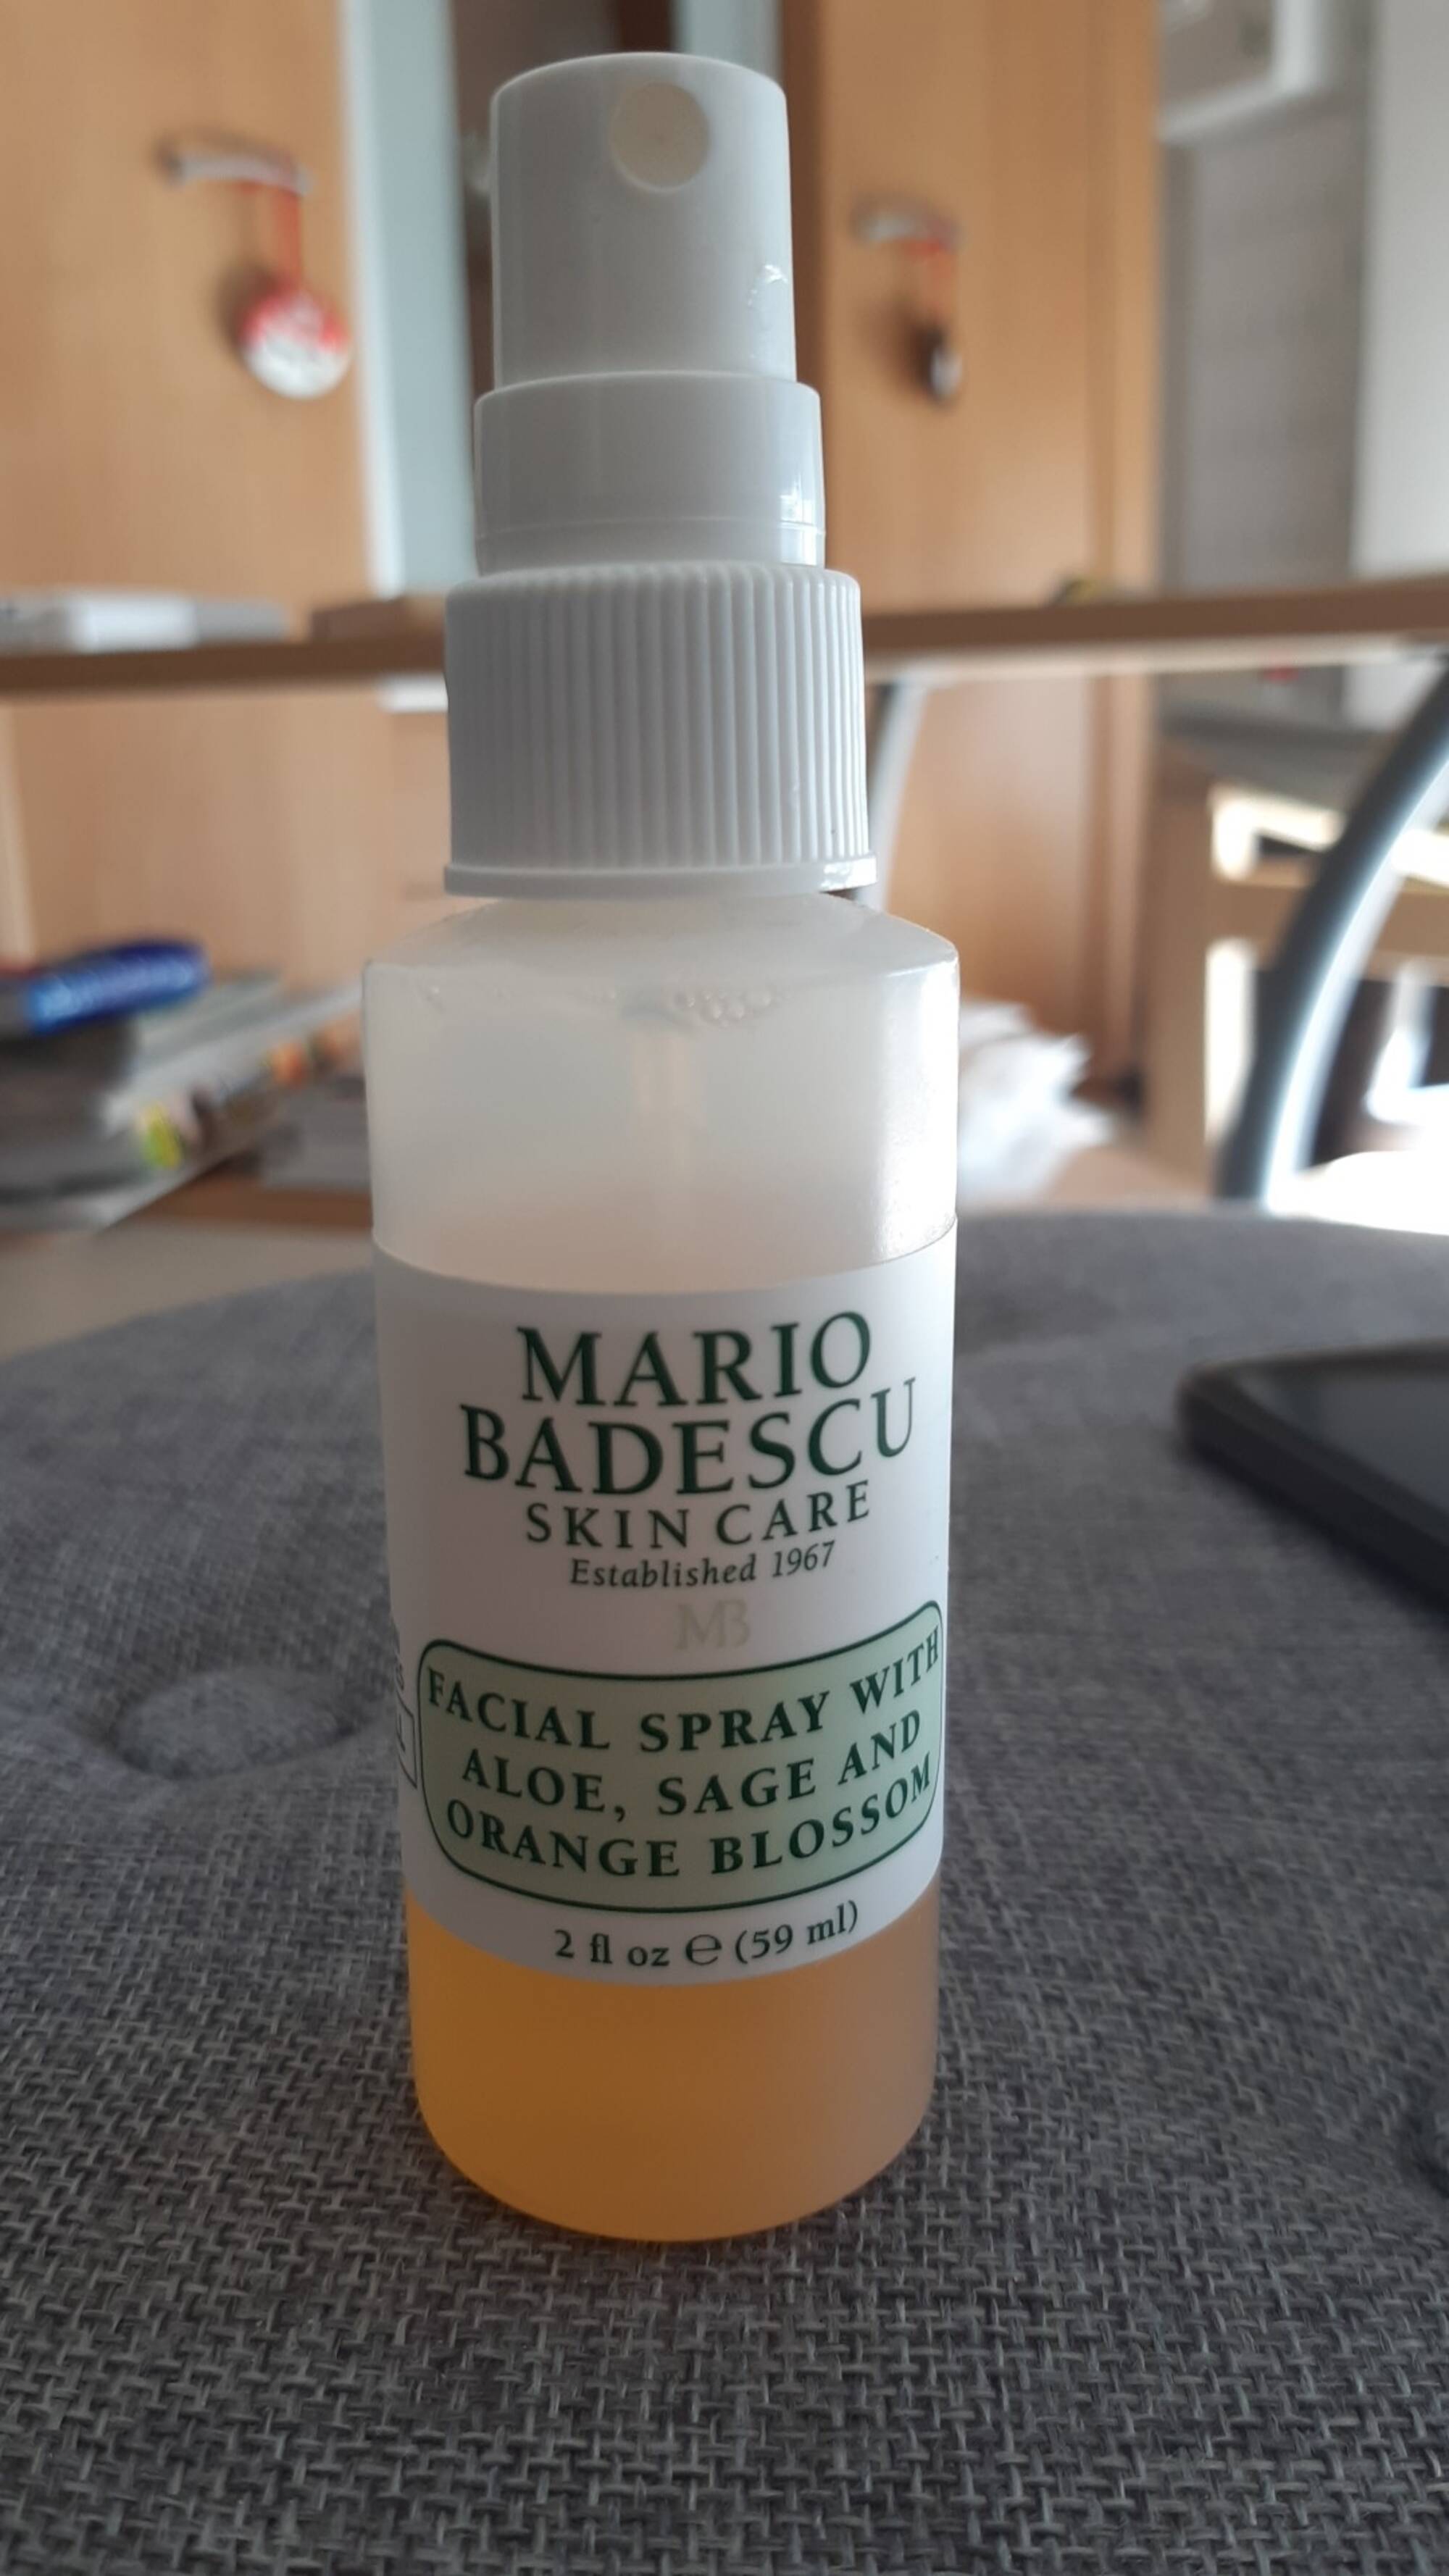 MARIO BADESCU - Facial spray with Aloe, Sage and Orange blossom